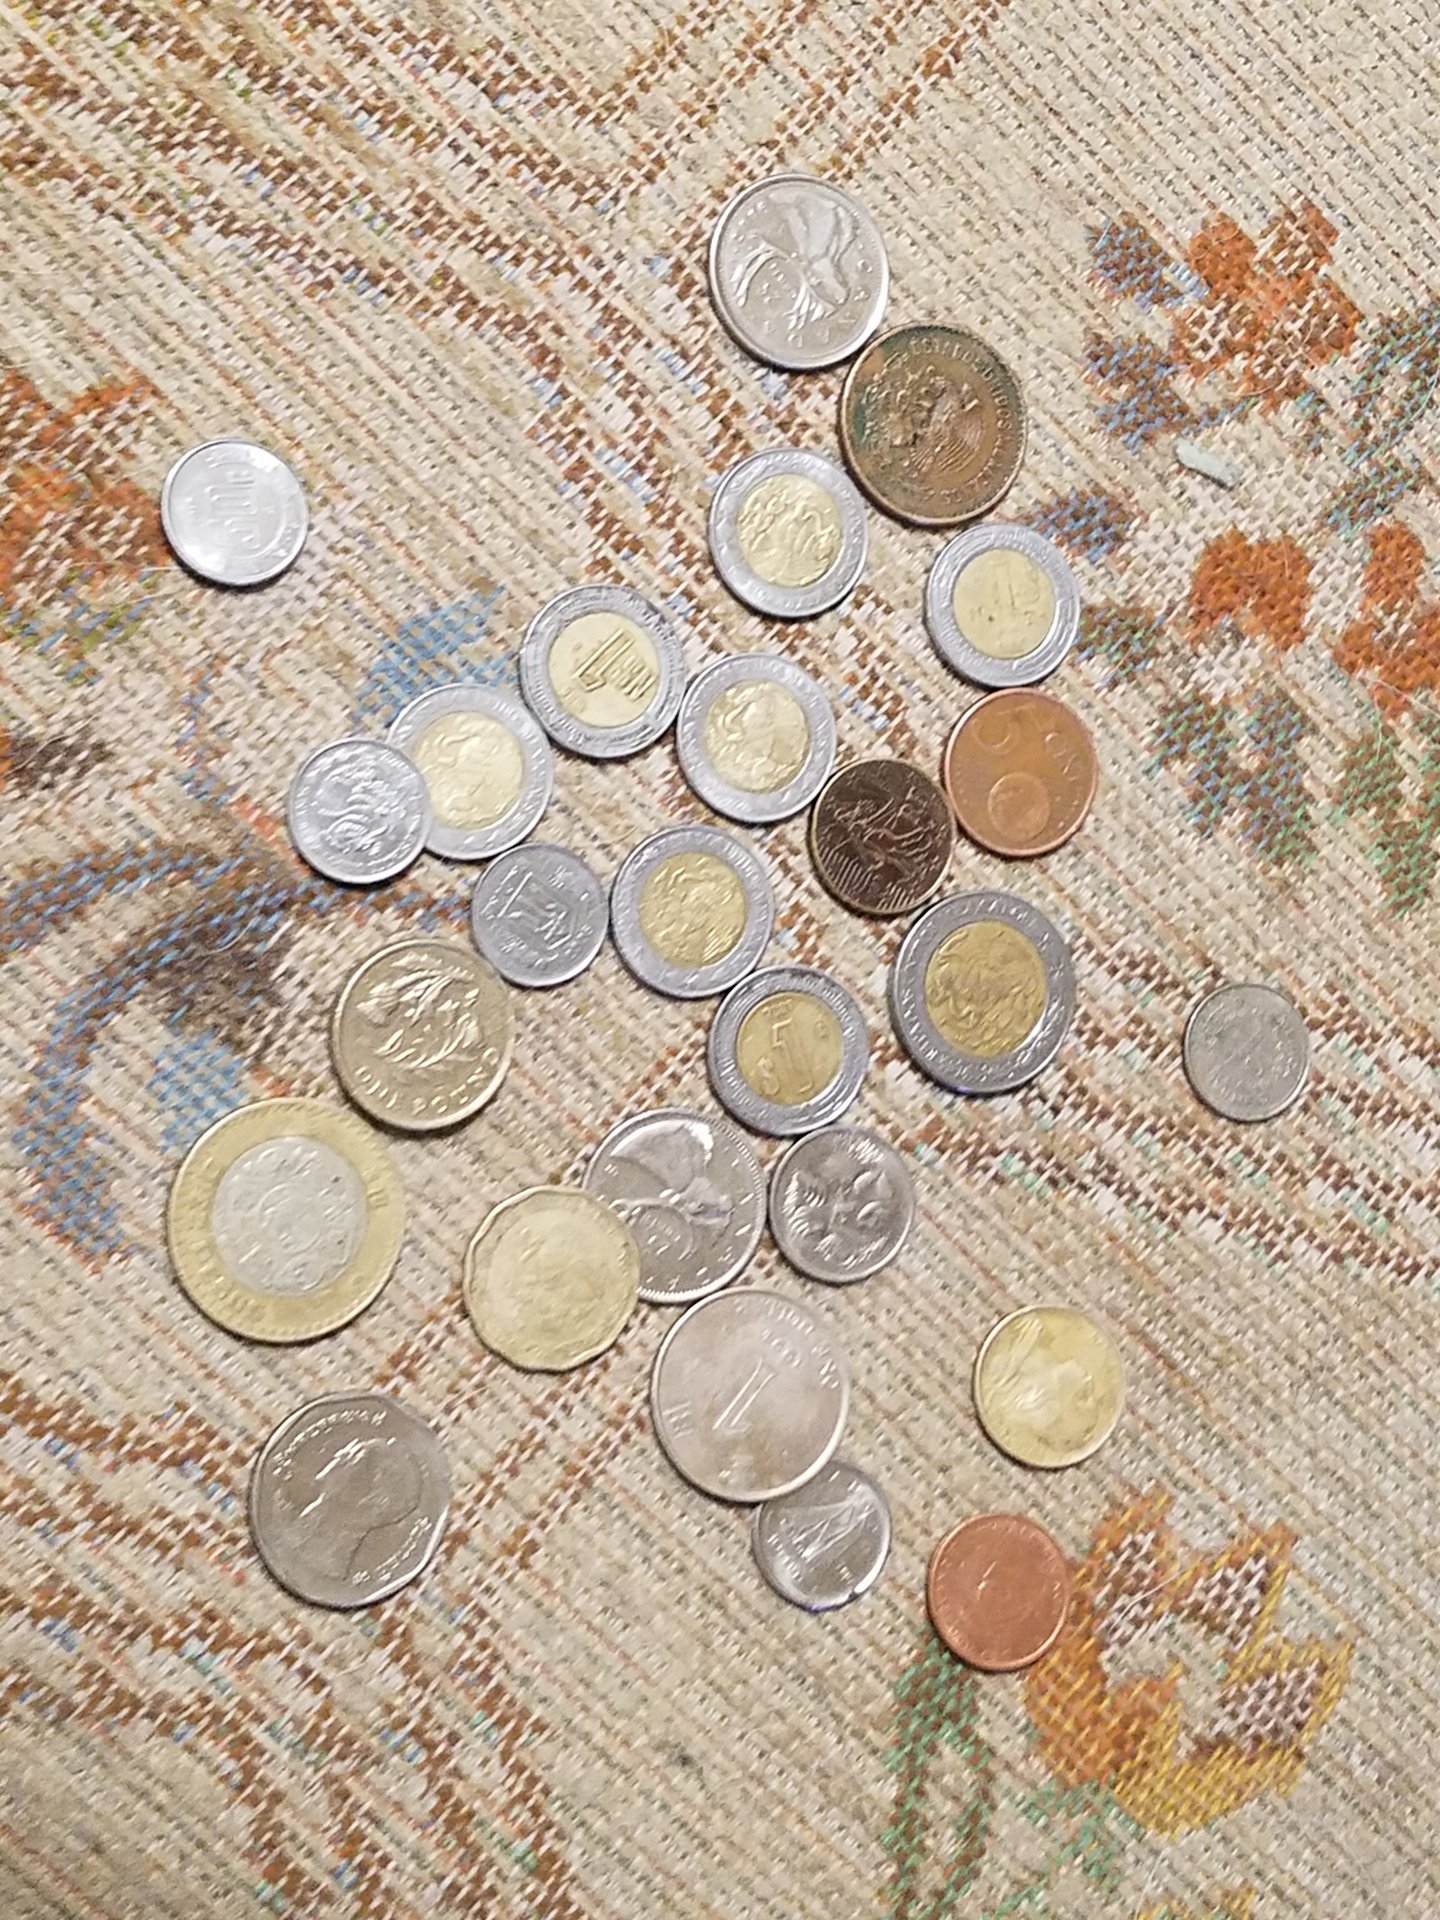 Foreign Coins.jpg